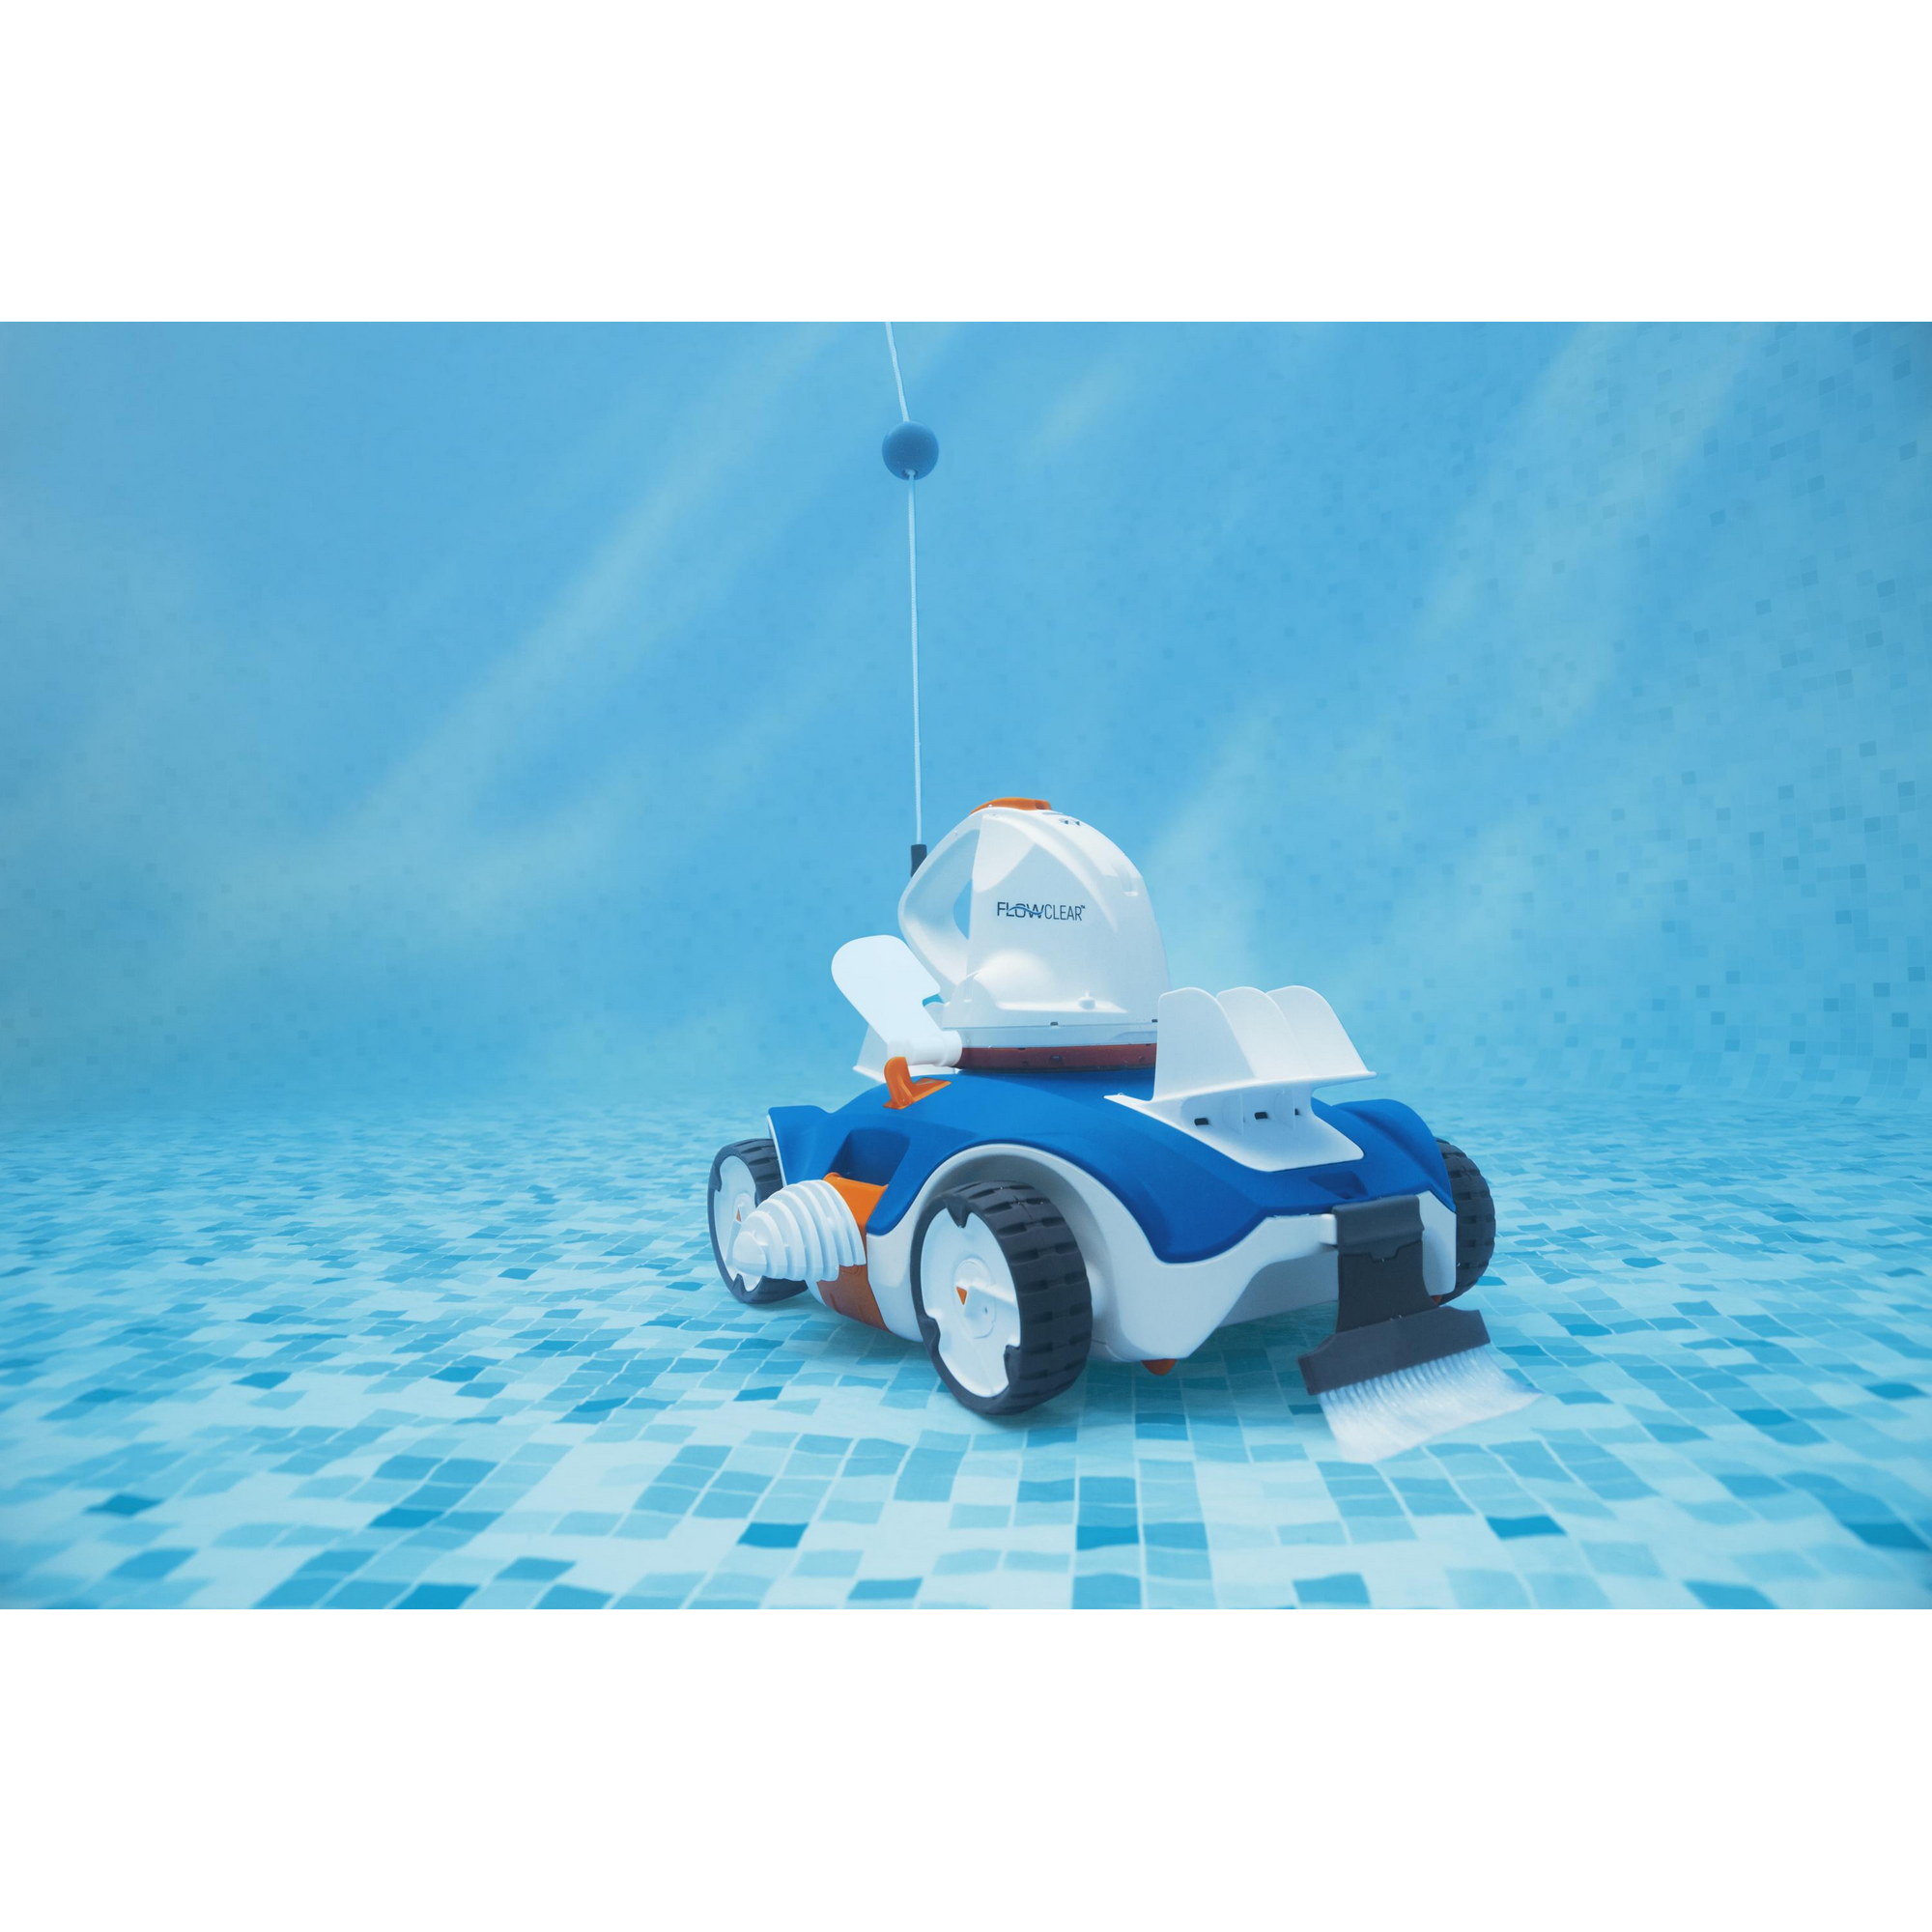 Bodenpoolsauger 'Flowclear AQUATRONIX' blau/weiß, mit Akku + product picture